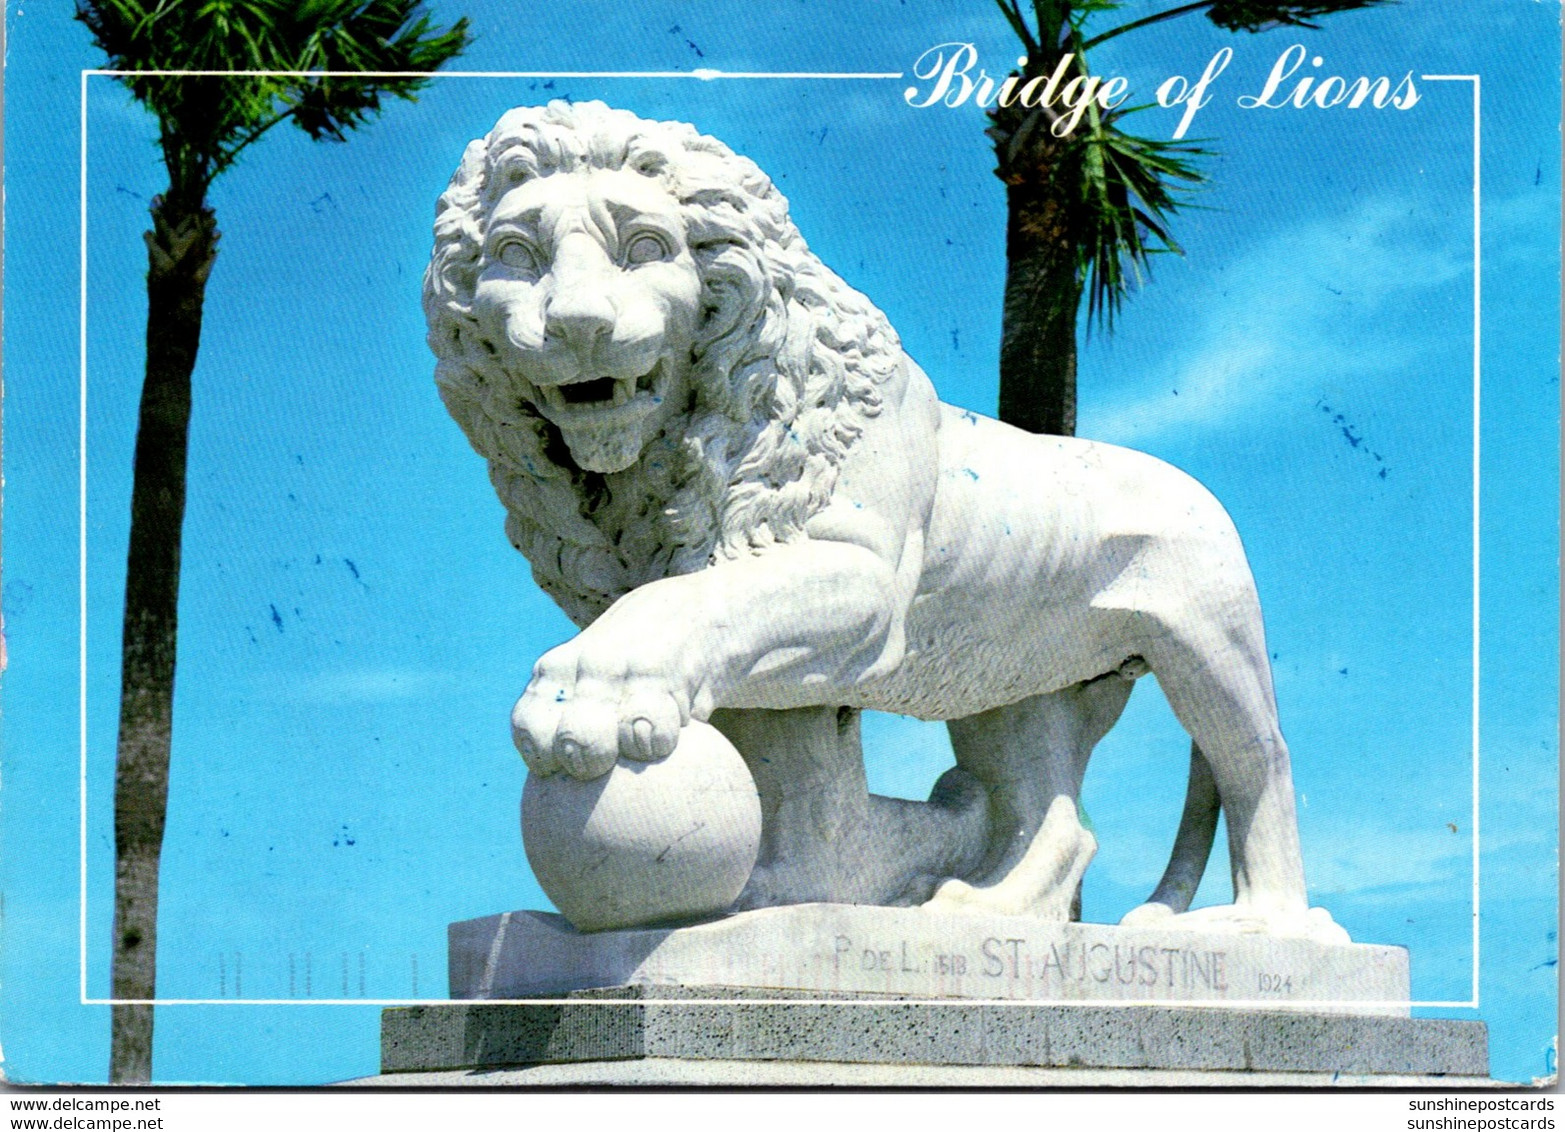 Florida St Augustine Bridge Of Lions Massive Lion At West Approach 1991 - St Augustine